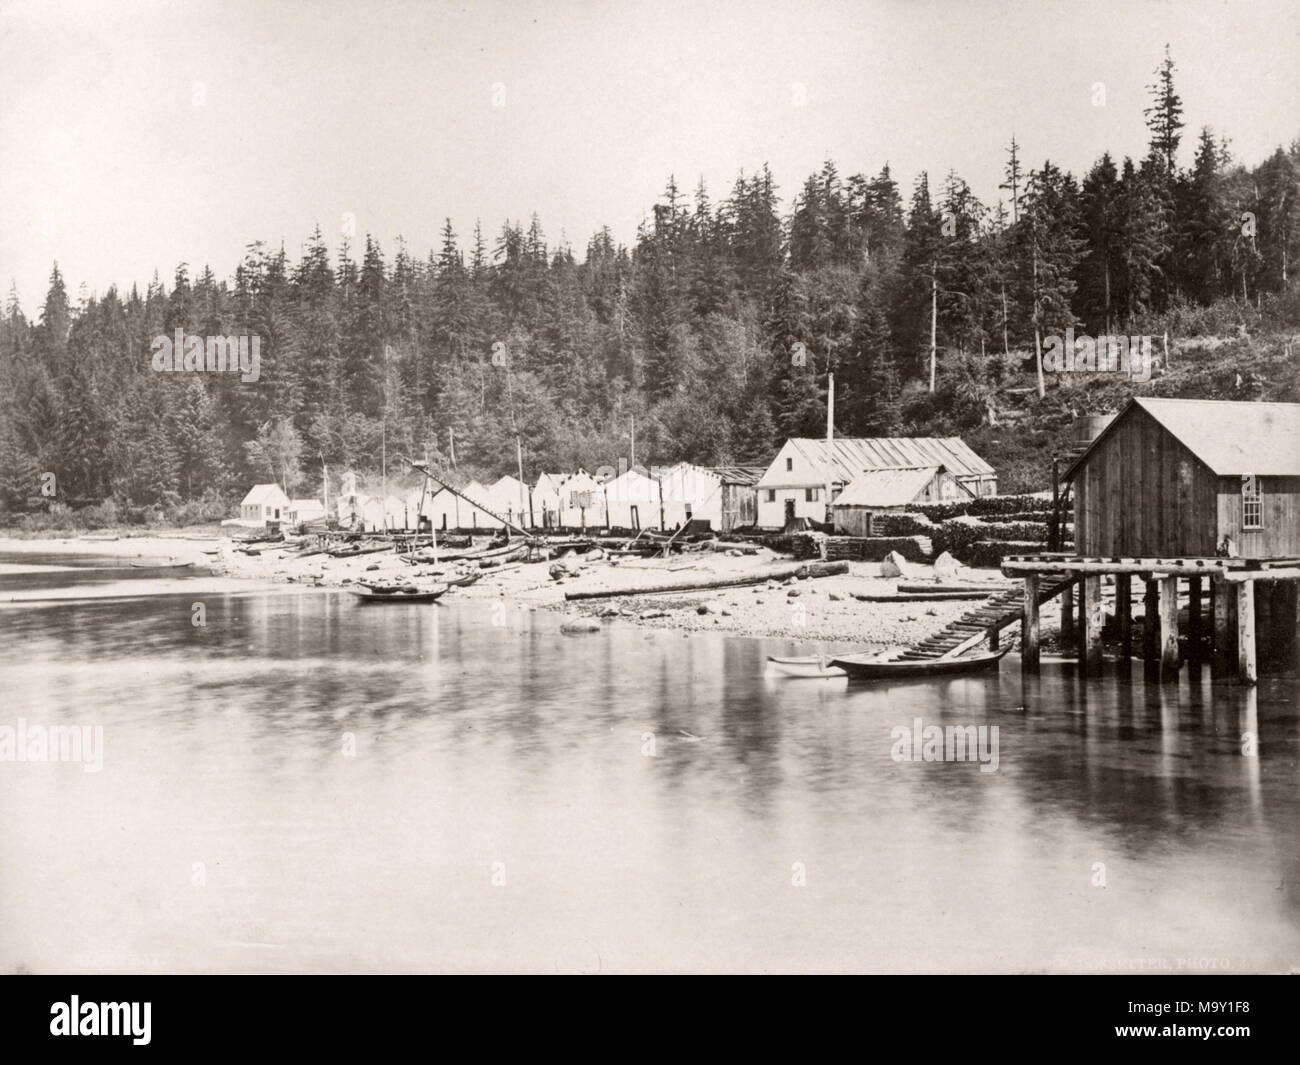 c. 1880s vintage photograph - North America - village Alert Bay on Cormorant Island, in the Regional District of Mount Waddington, British Columbia, Canada. Stock Photo